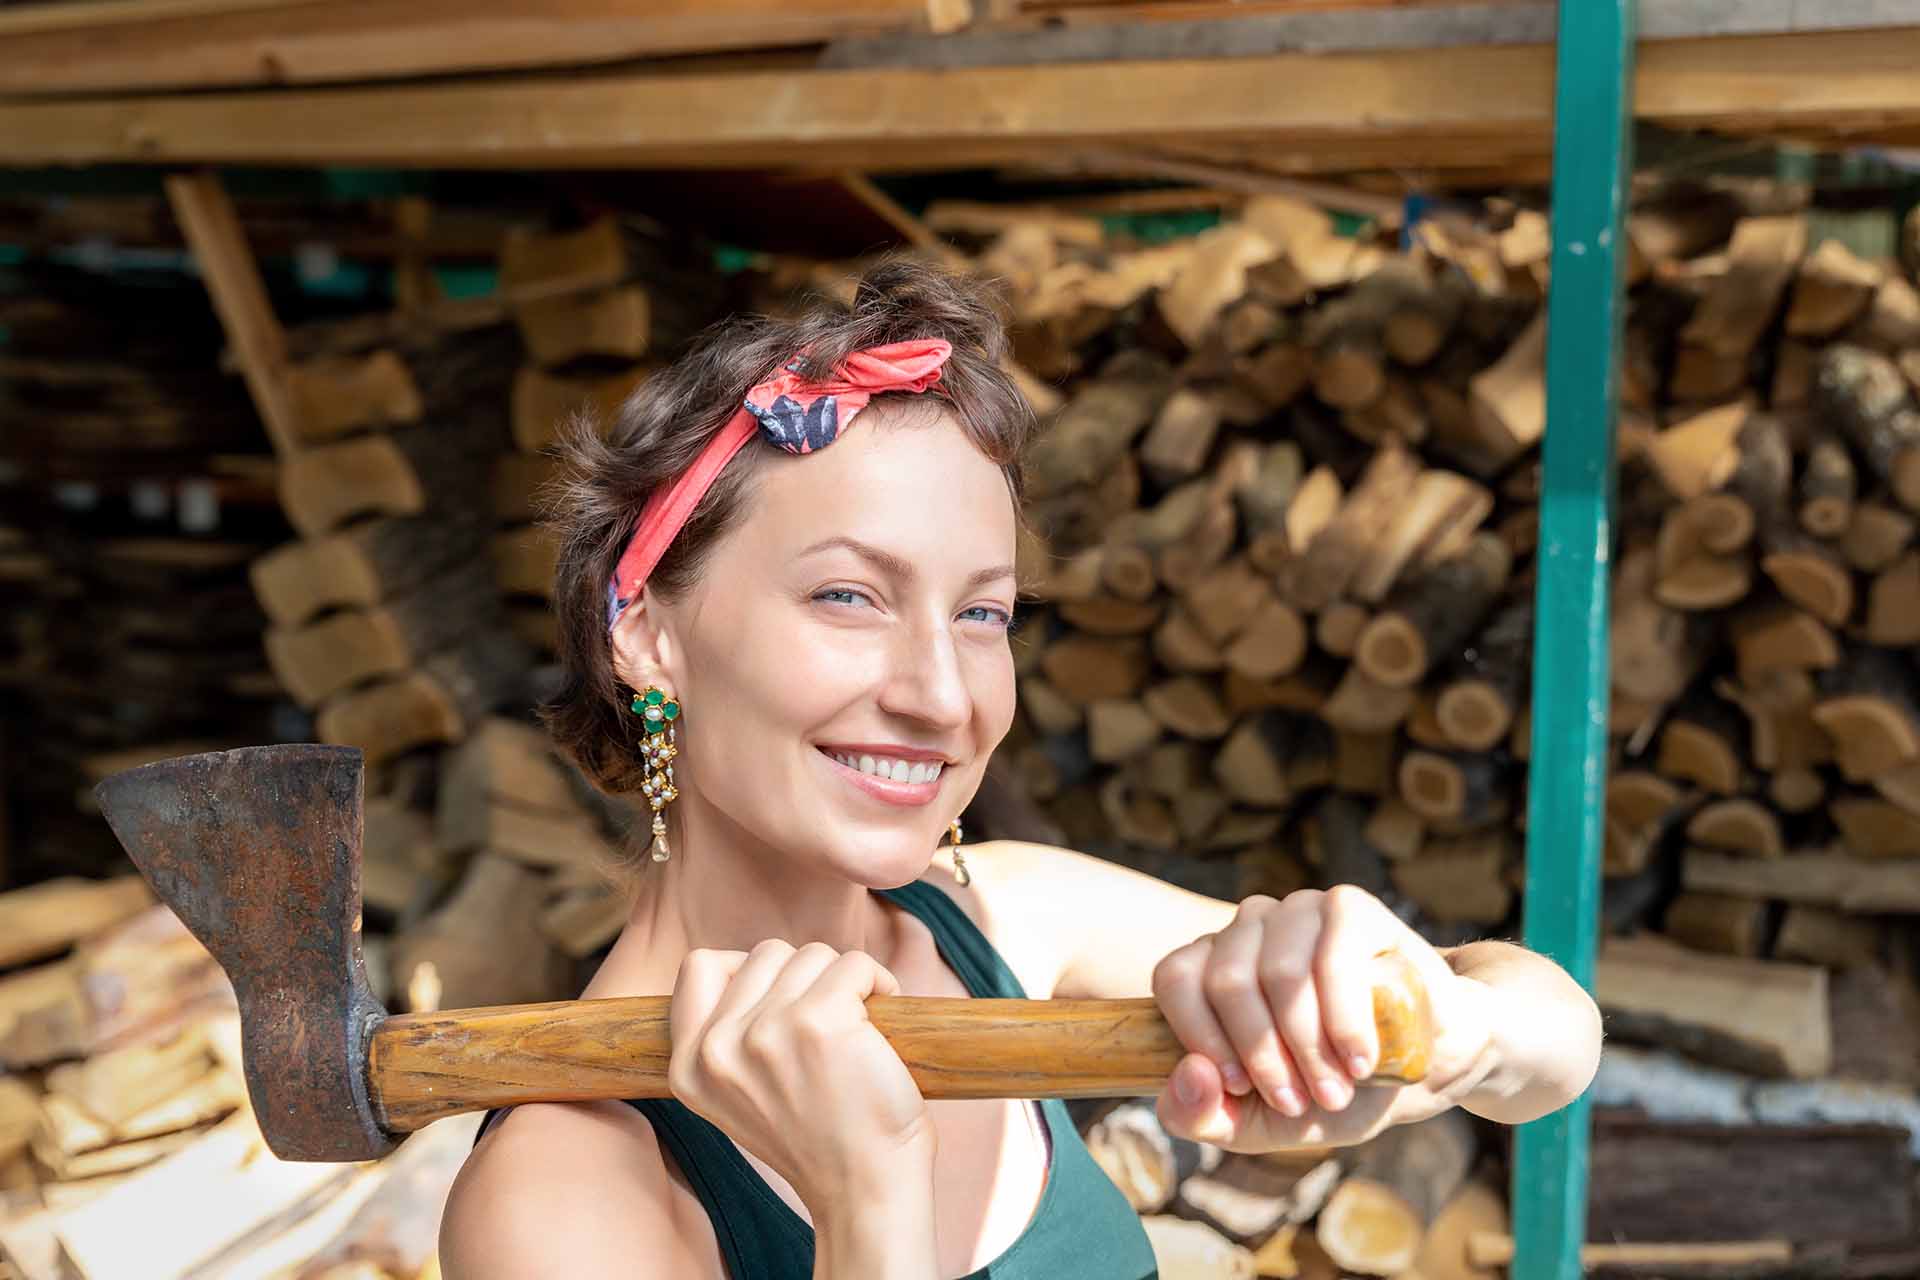 A woman wearing a green sleeveless is holding an axe.